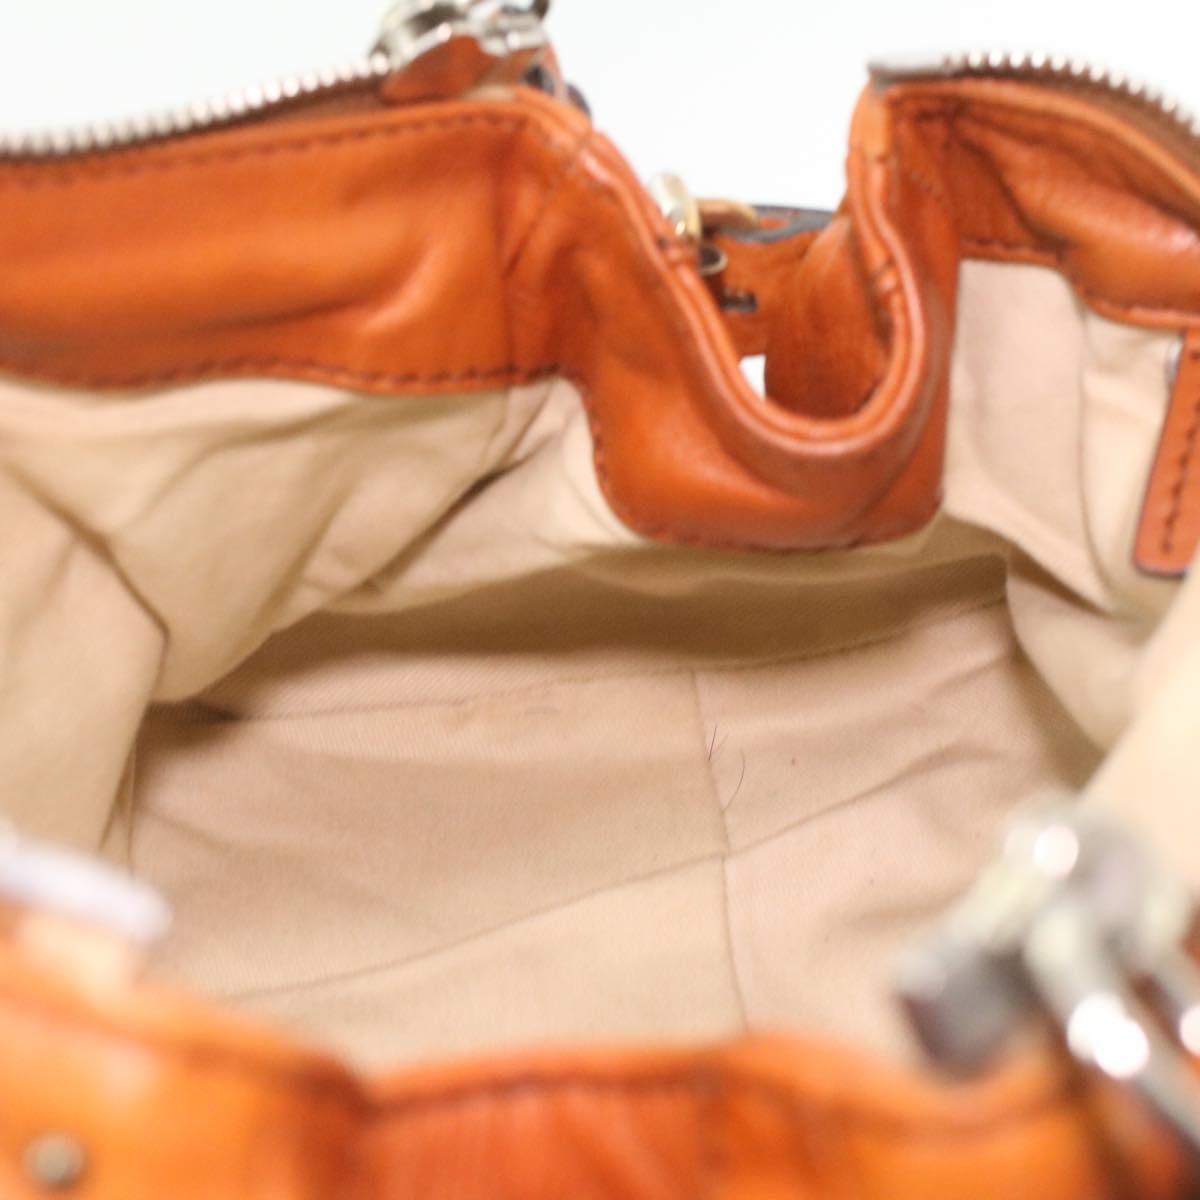 Chloe Paddington Hand Bag Leather Brown Auth 37540